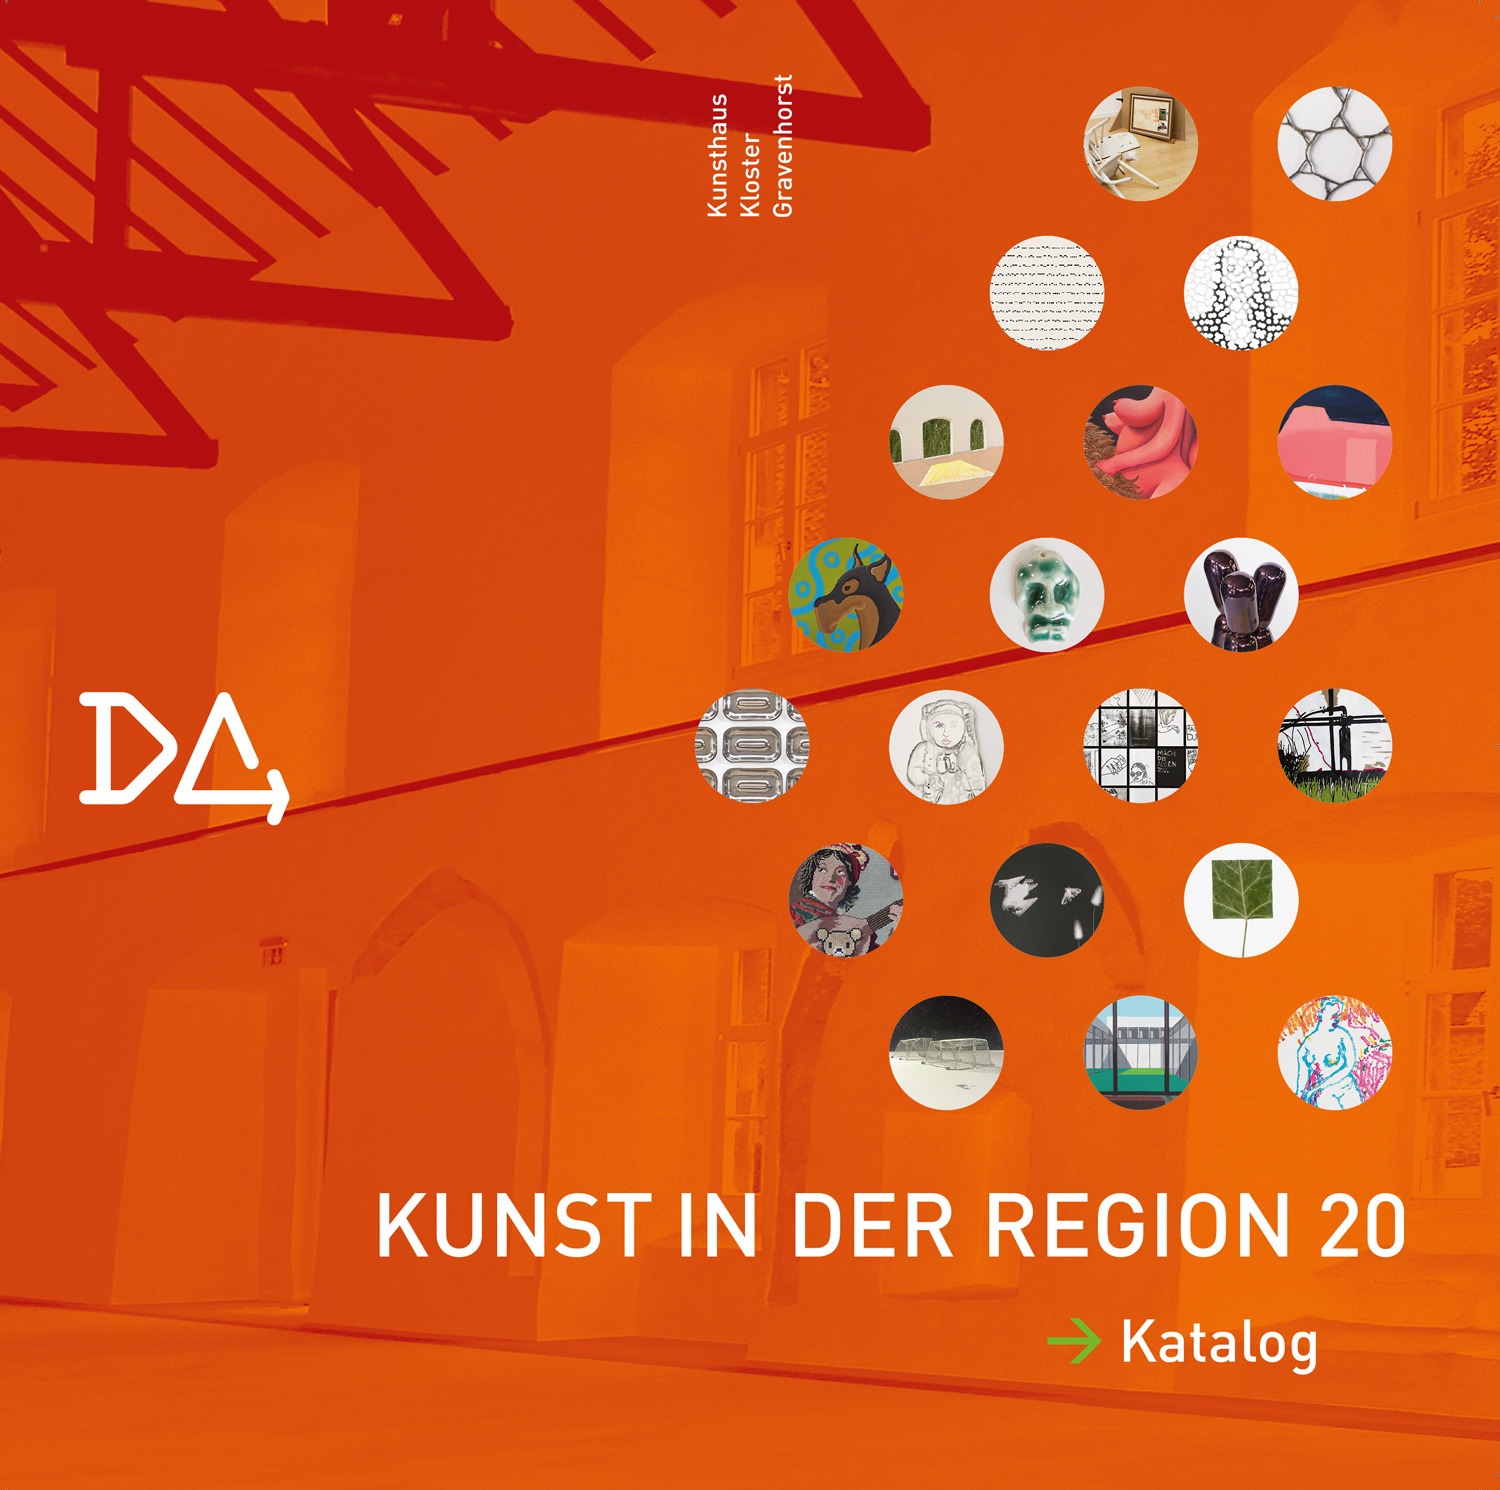 Katalog Kunst in der Region 20 | DA, Kunsthaus Kloster Gravenhorst